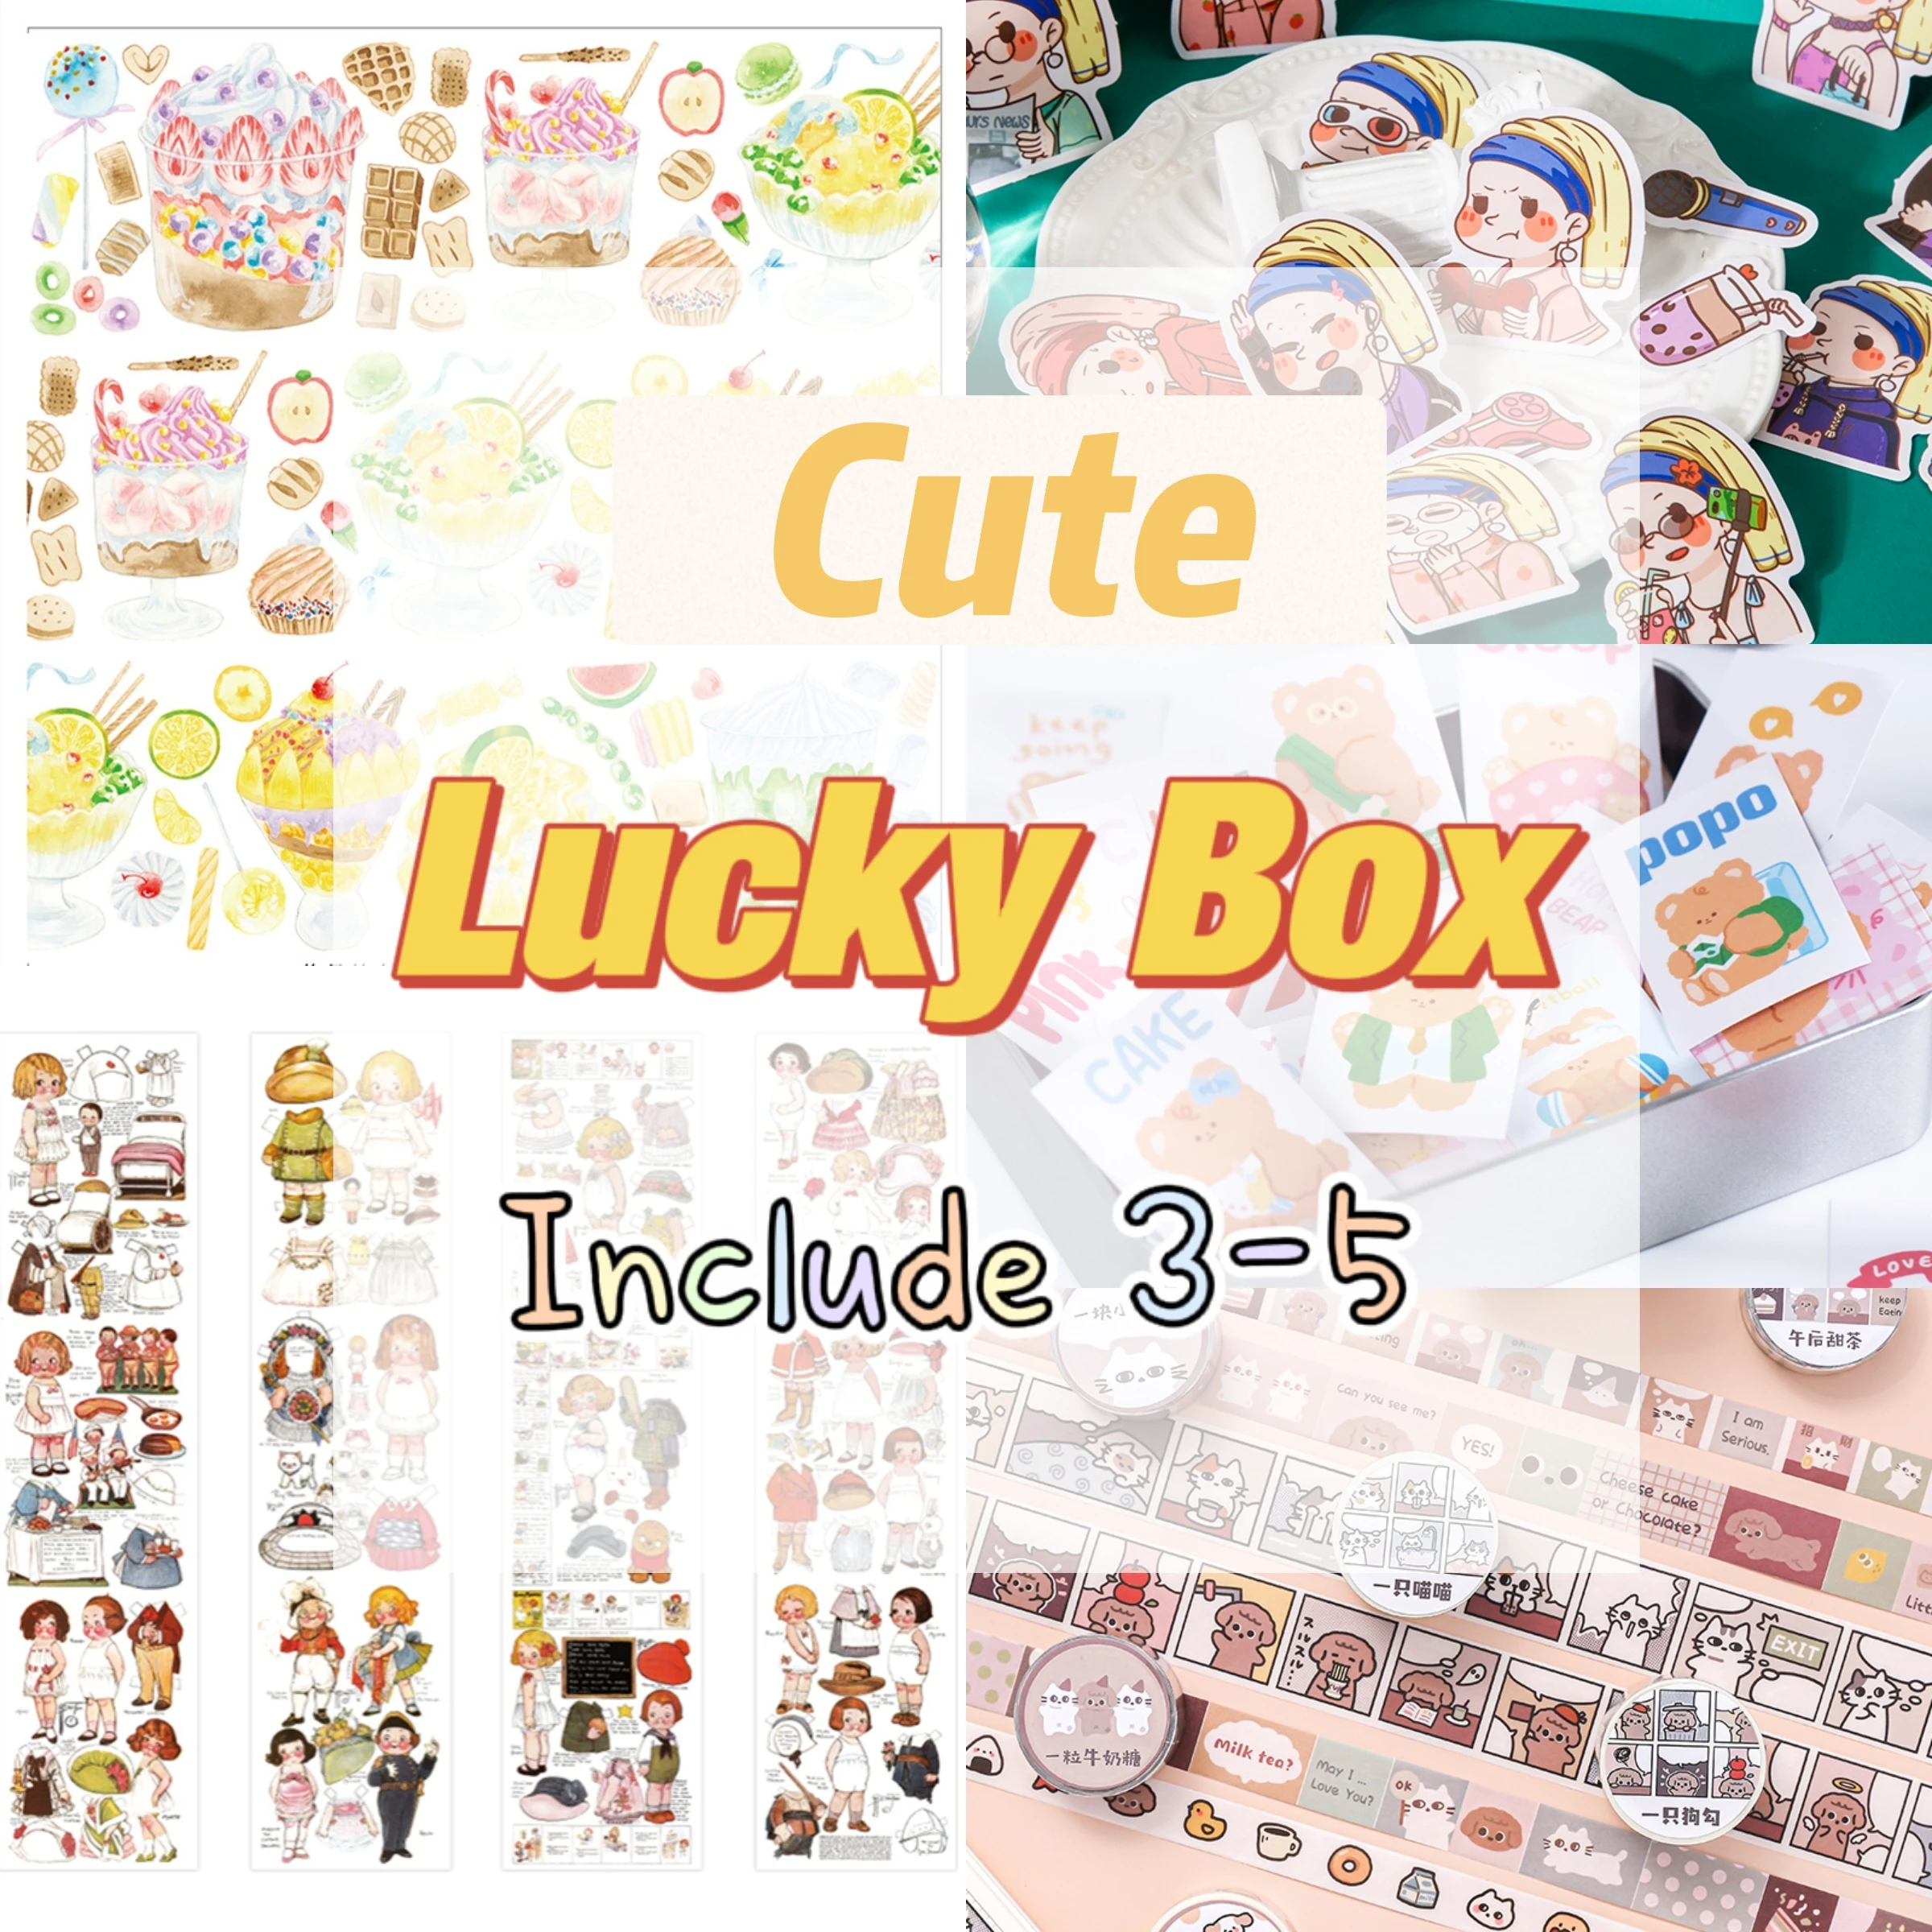 

Cute Lucky Box Sticker Washitape Note Decoration Material Paper Creative Junk Journal Scrapbooking Maskingtape Stationery